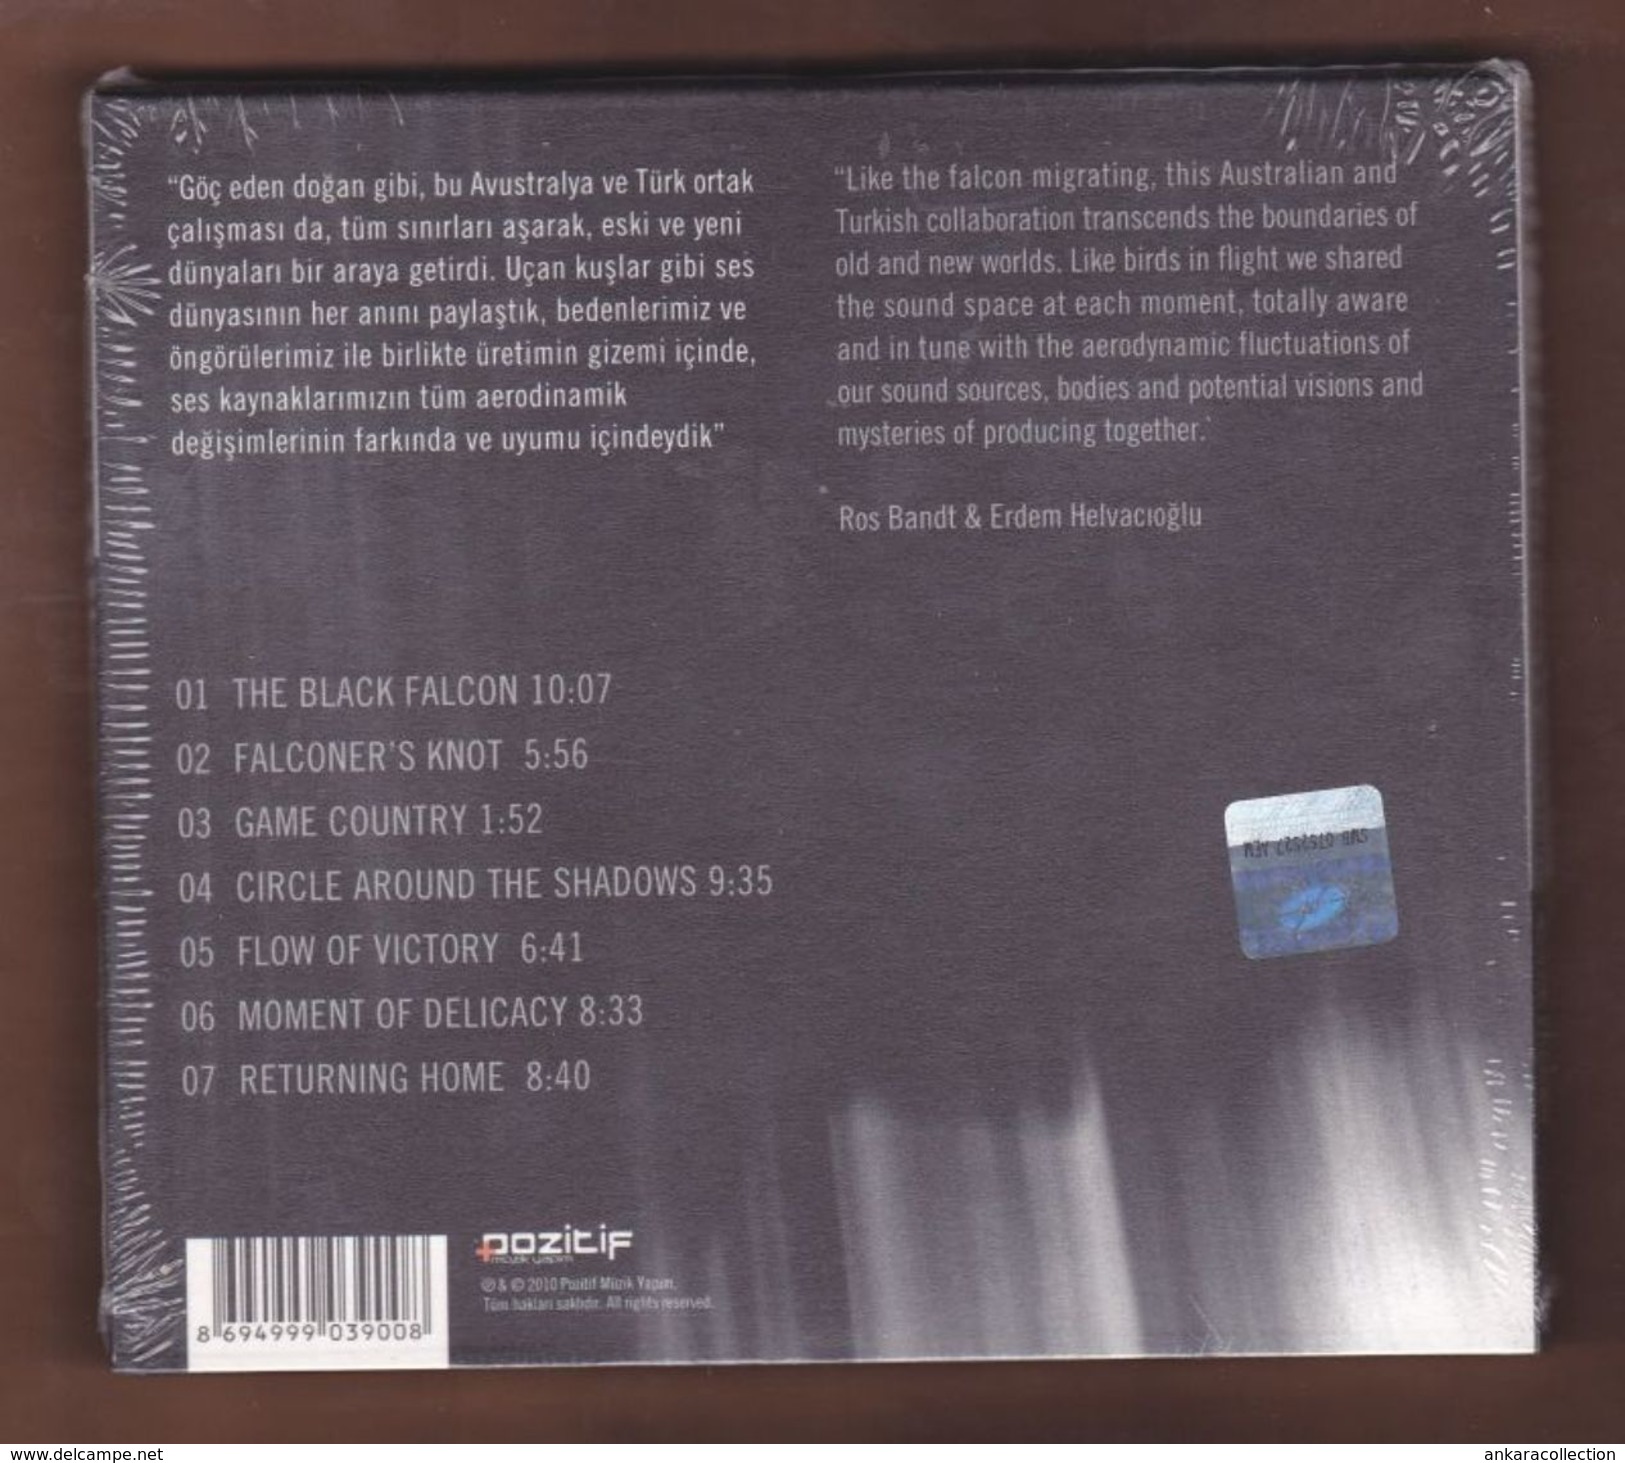 AC -  Erdem Helvacıoğlu & Ros Bandt Black Falcon BRAND NEW TURKISH MUSIC CD - Wereldmuziek